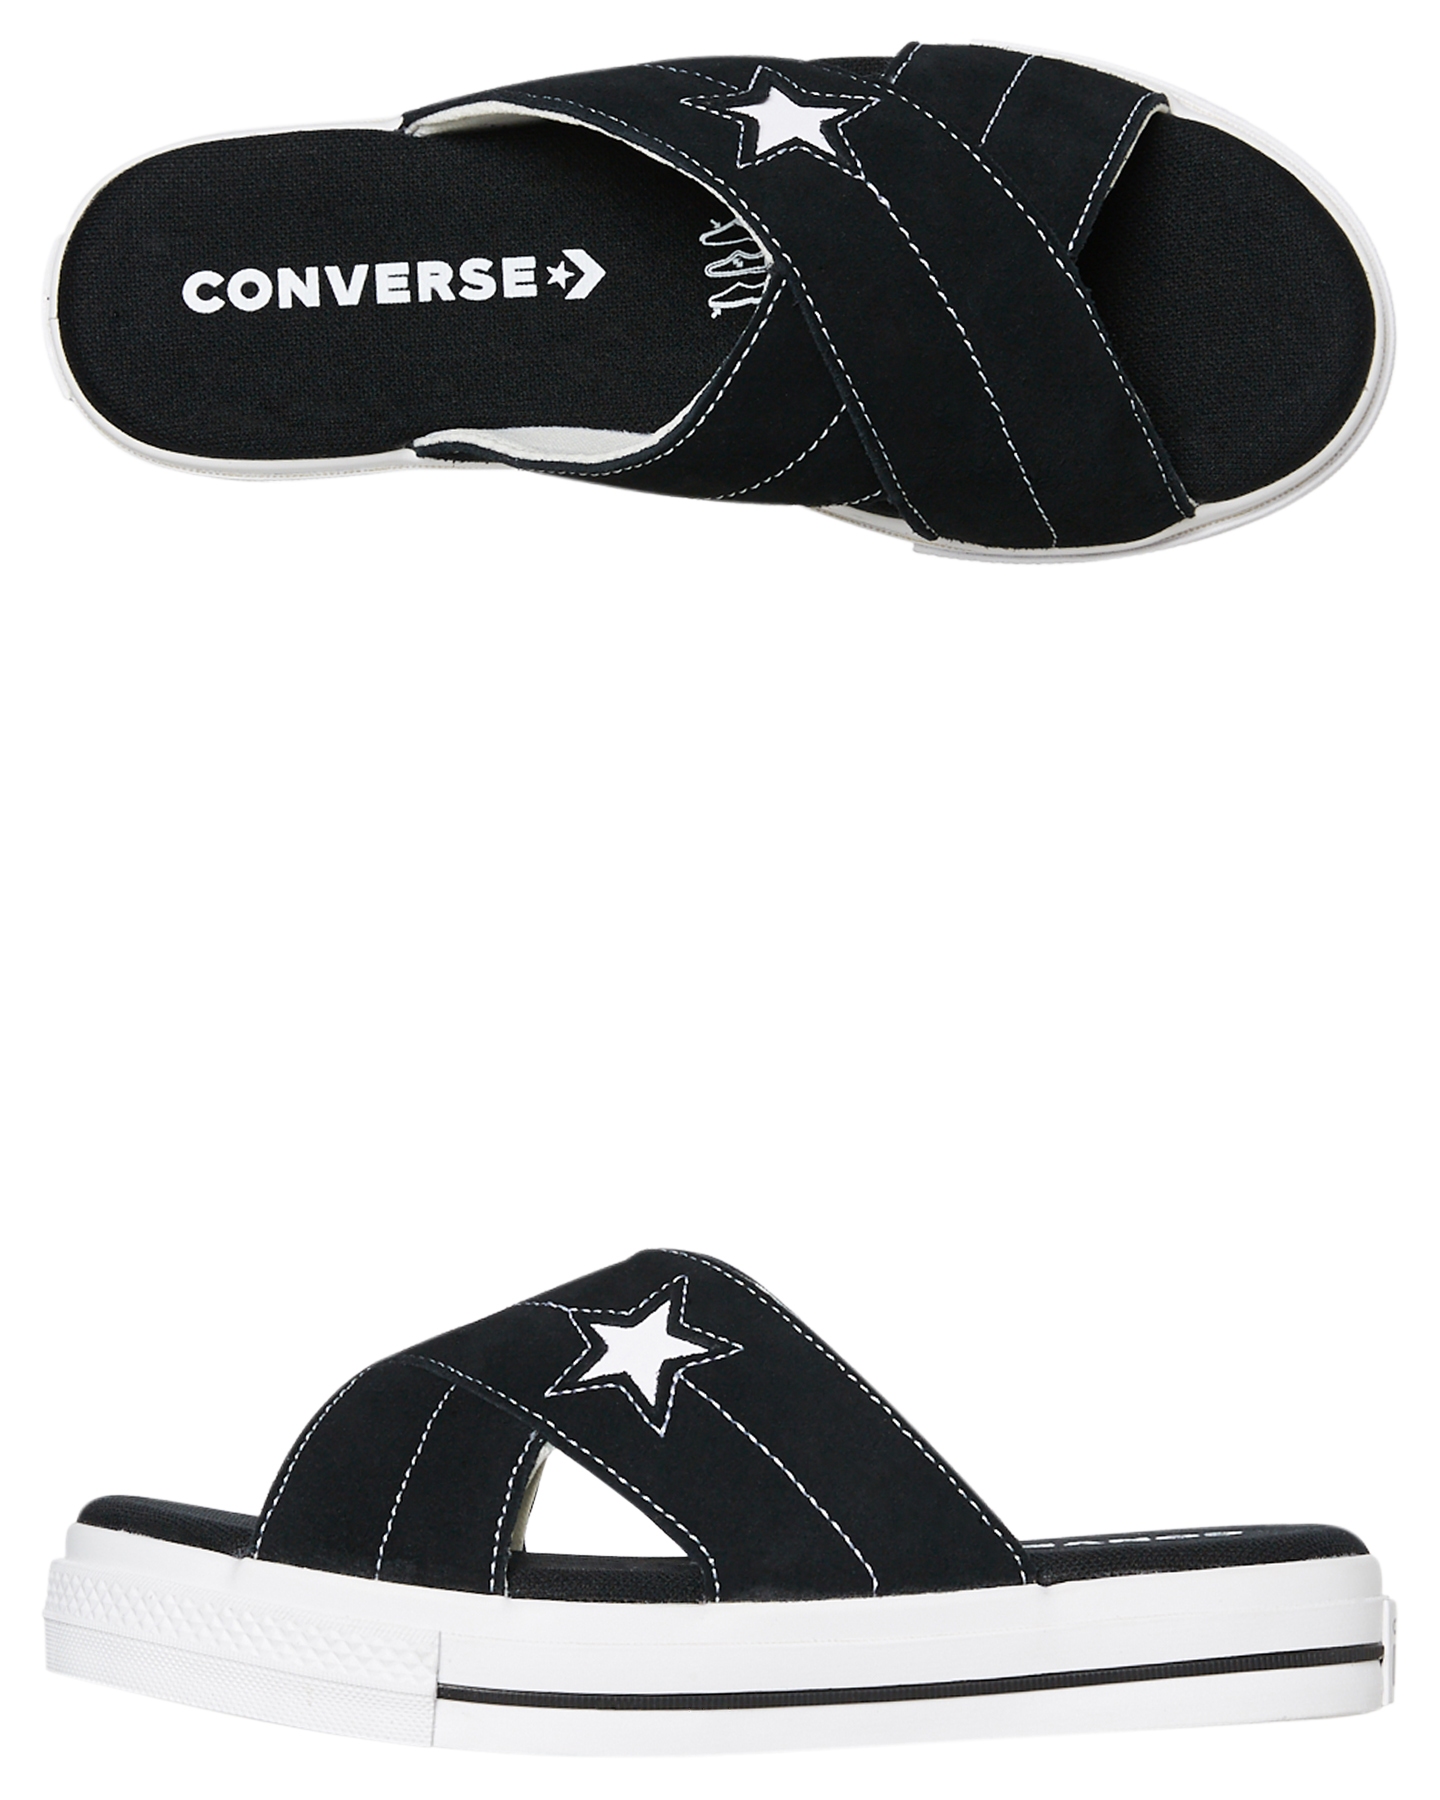 converse one star flip flops